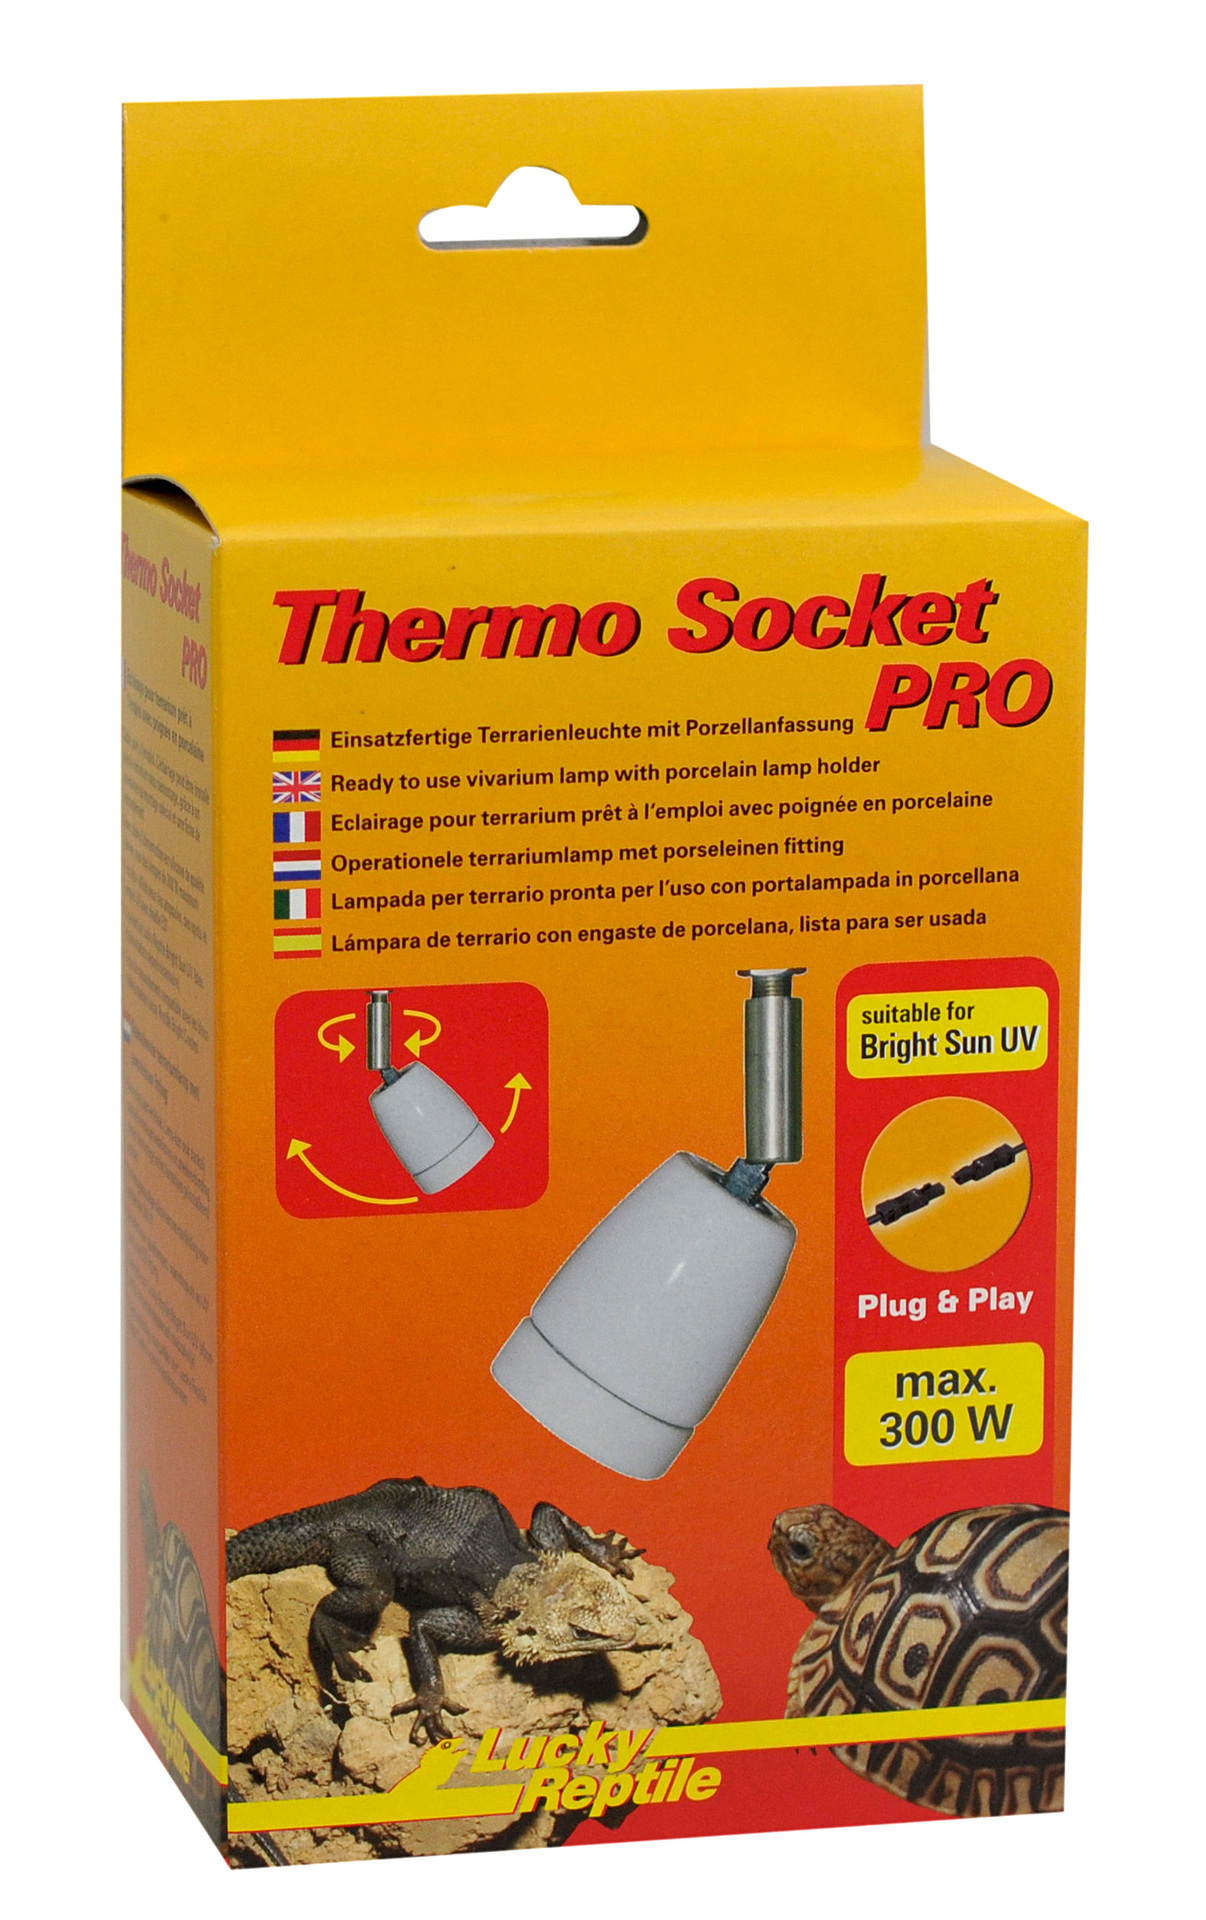 Thermo Socket PRO – Porzellanfassung